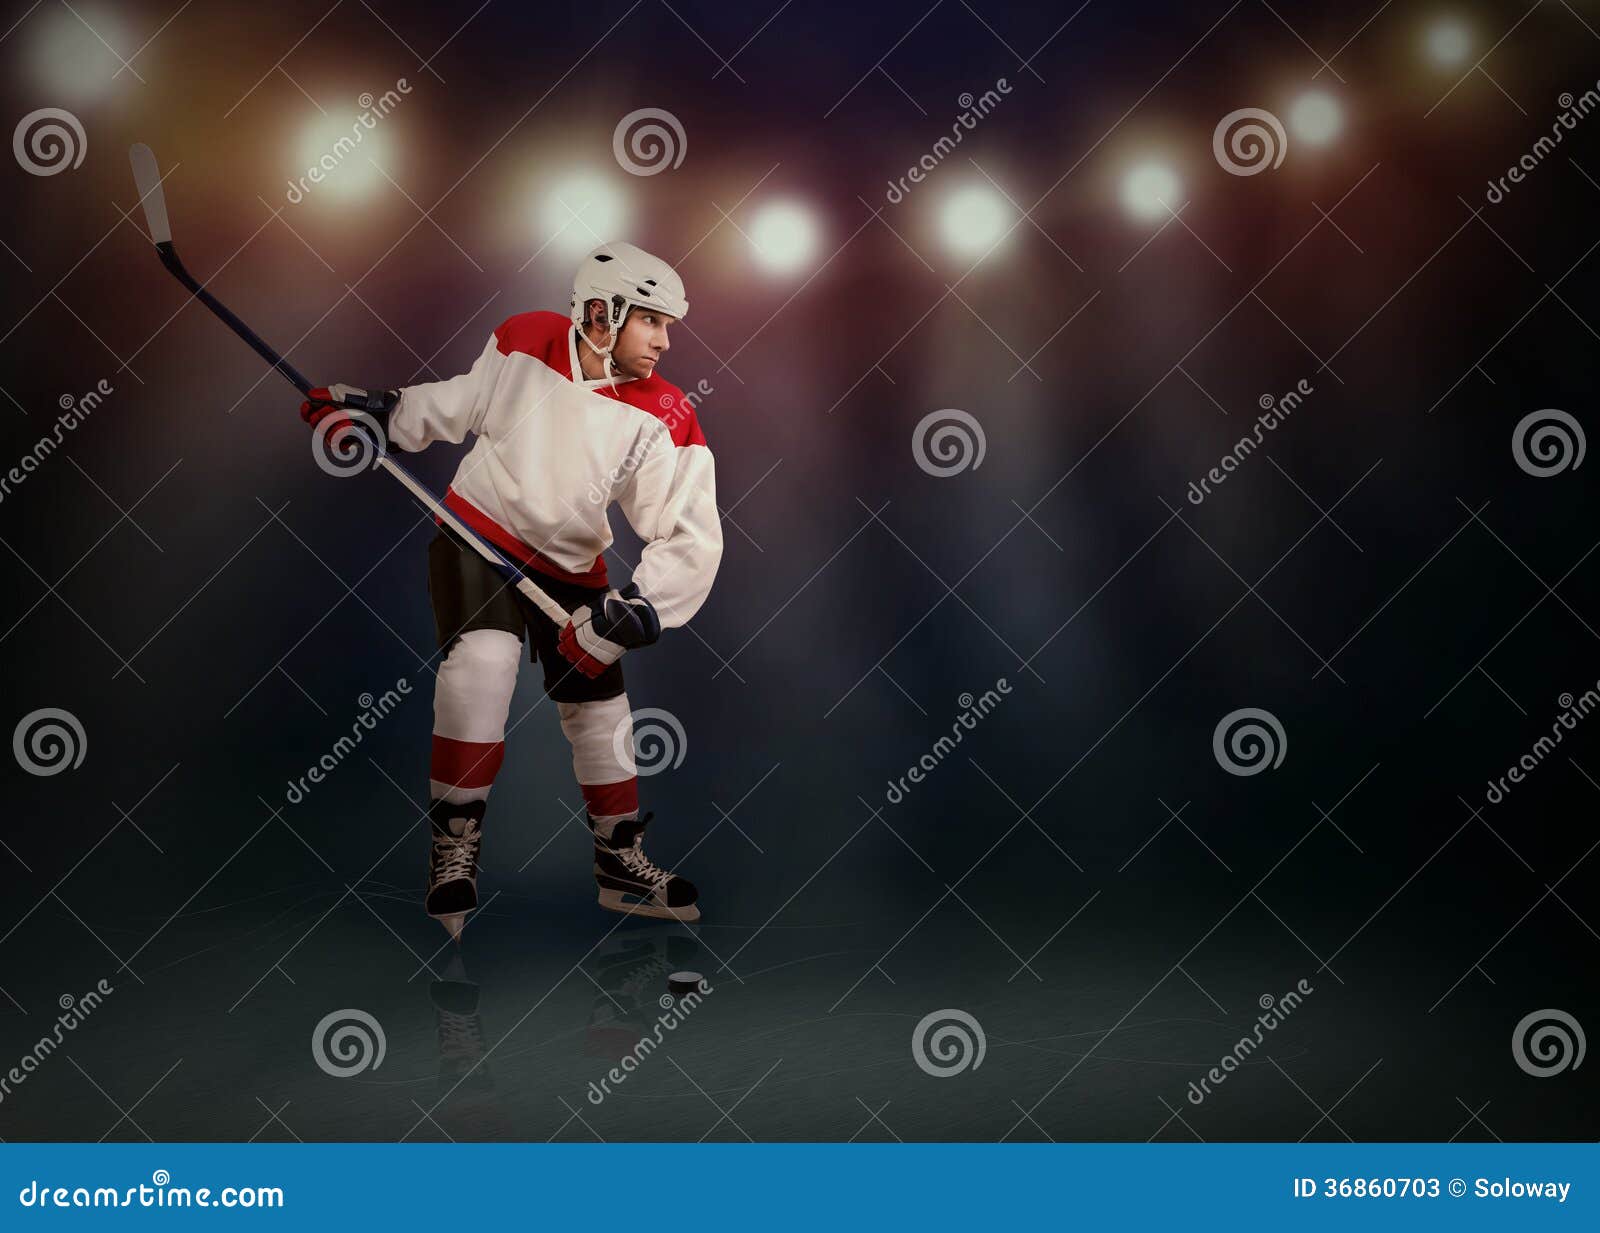 ice hockey player ready to make a snapshot